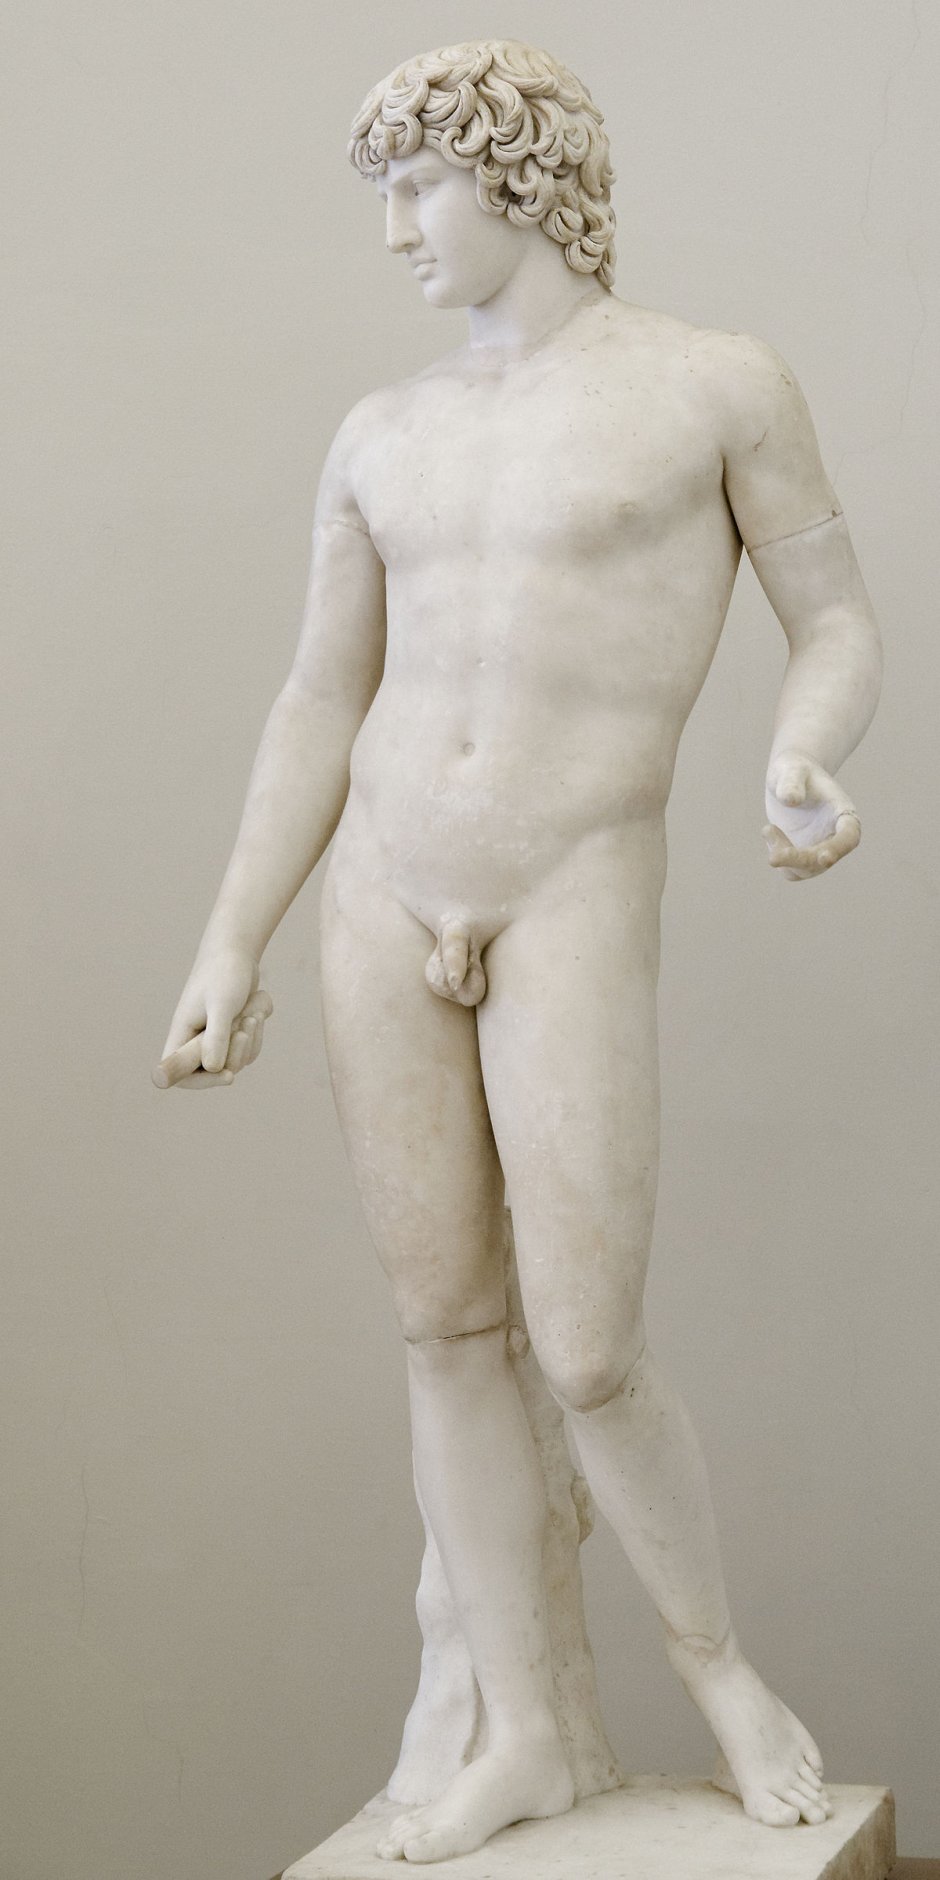 Геракл скульптура Микеланджело